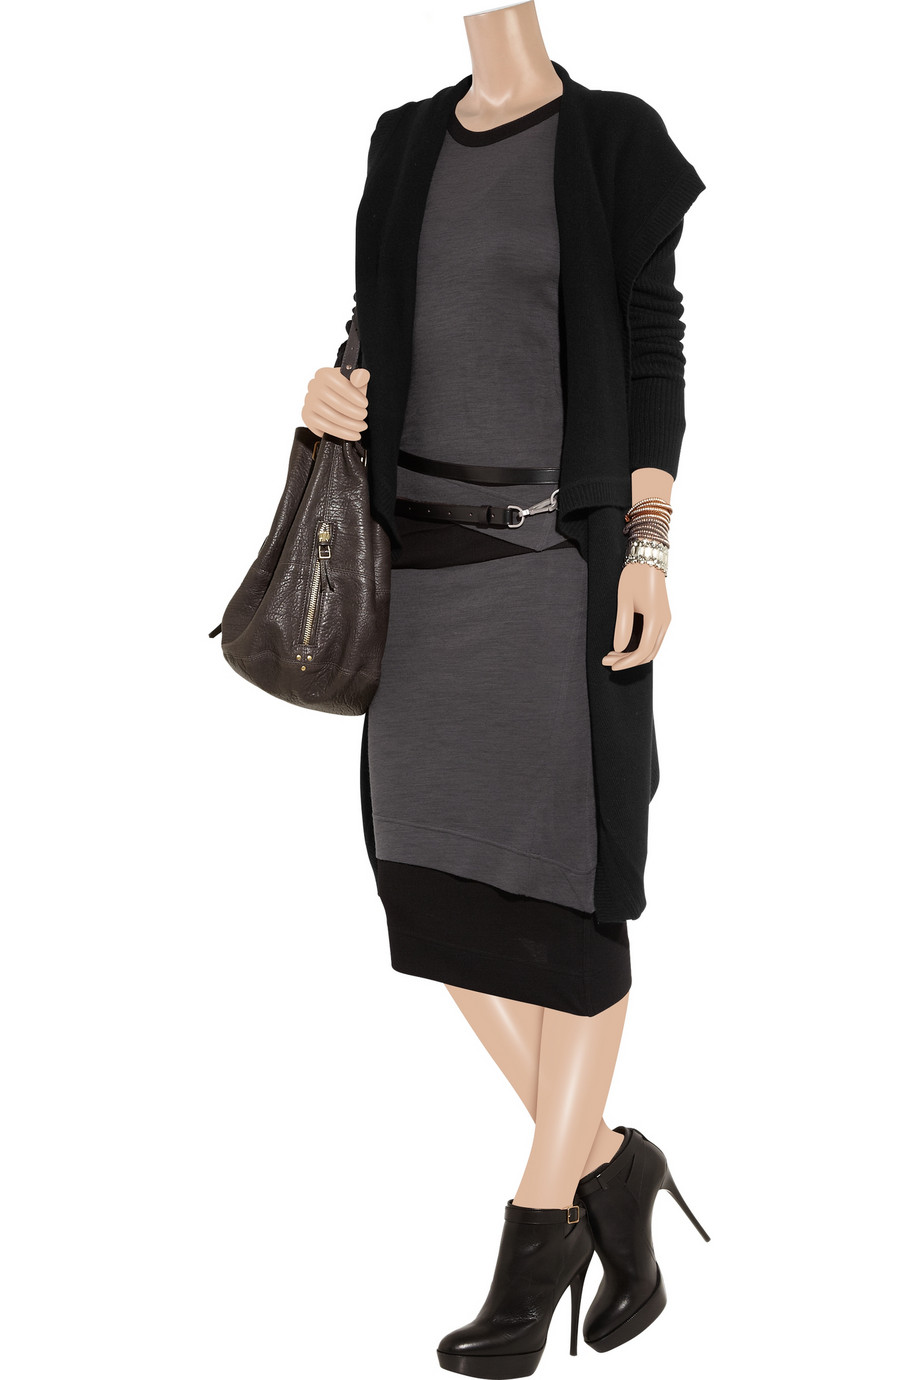 Lyst - Donna Karan Layered Jersey Skirt in Gray